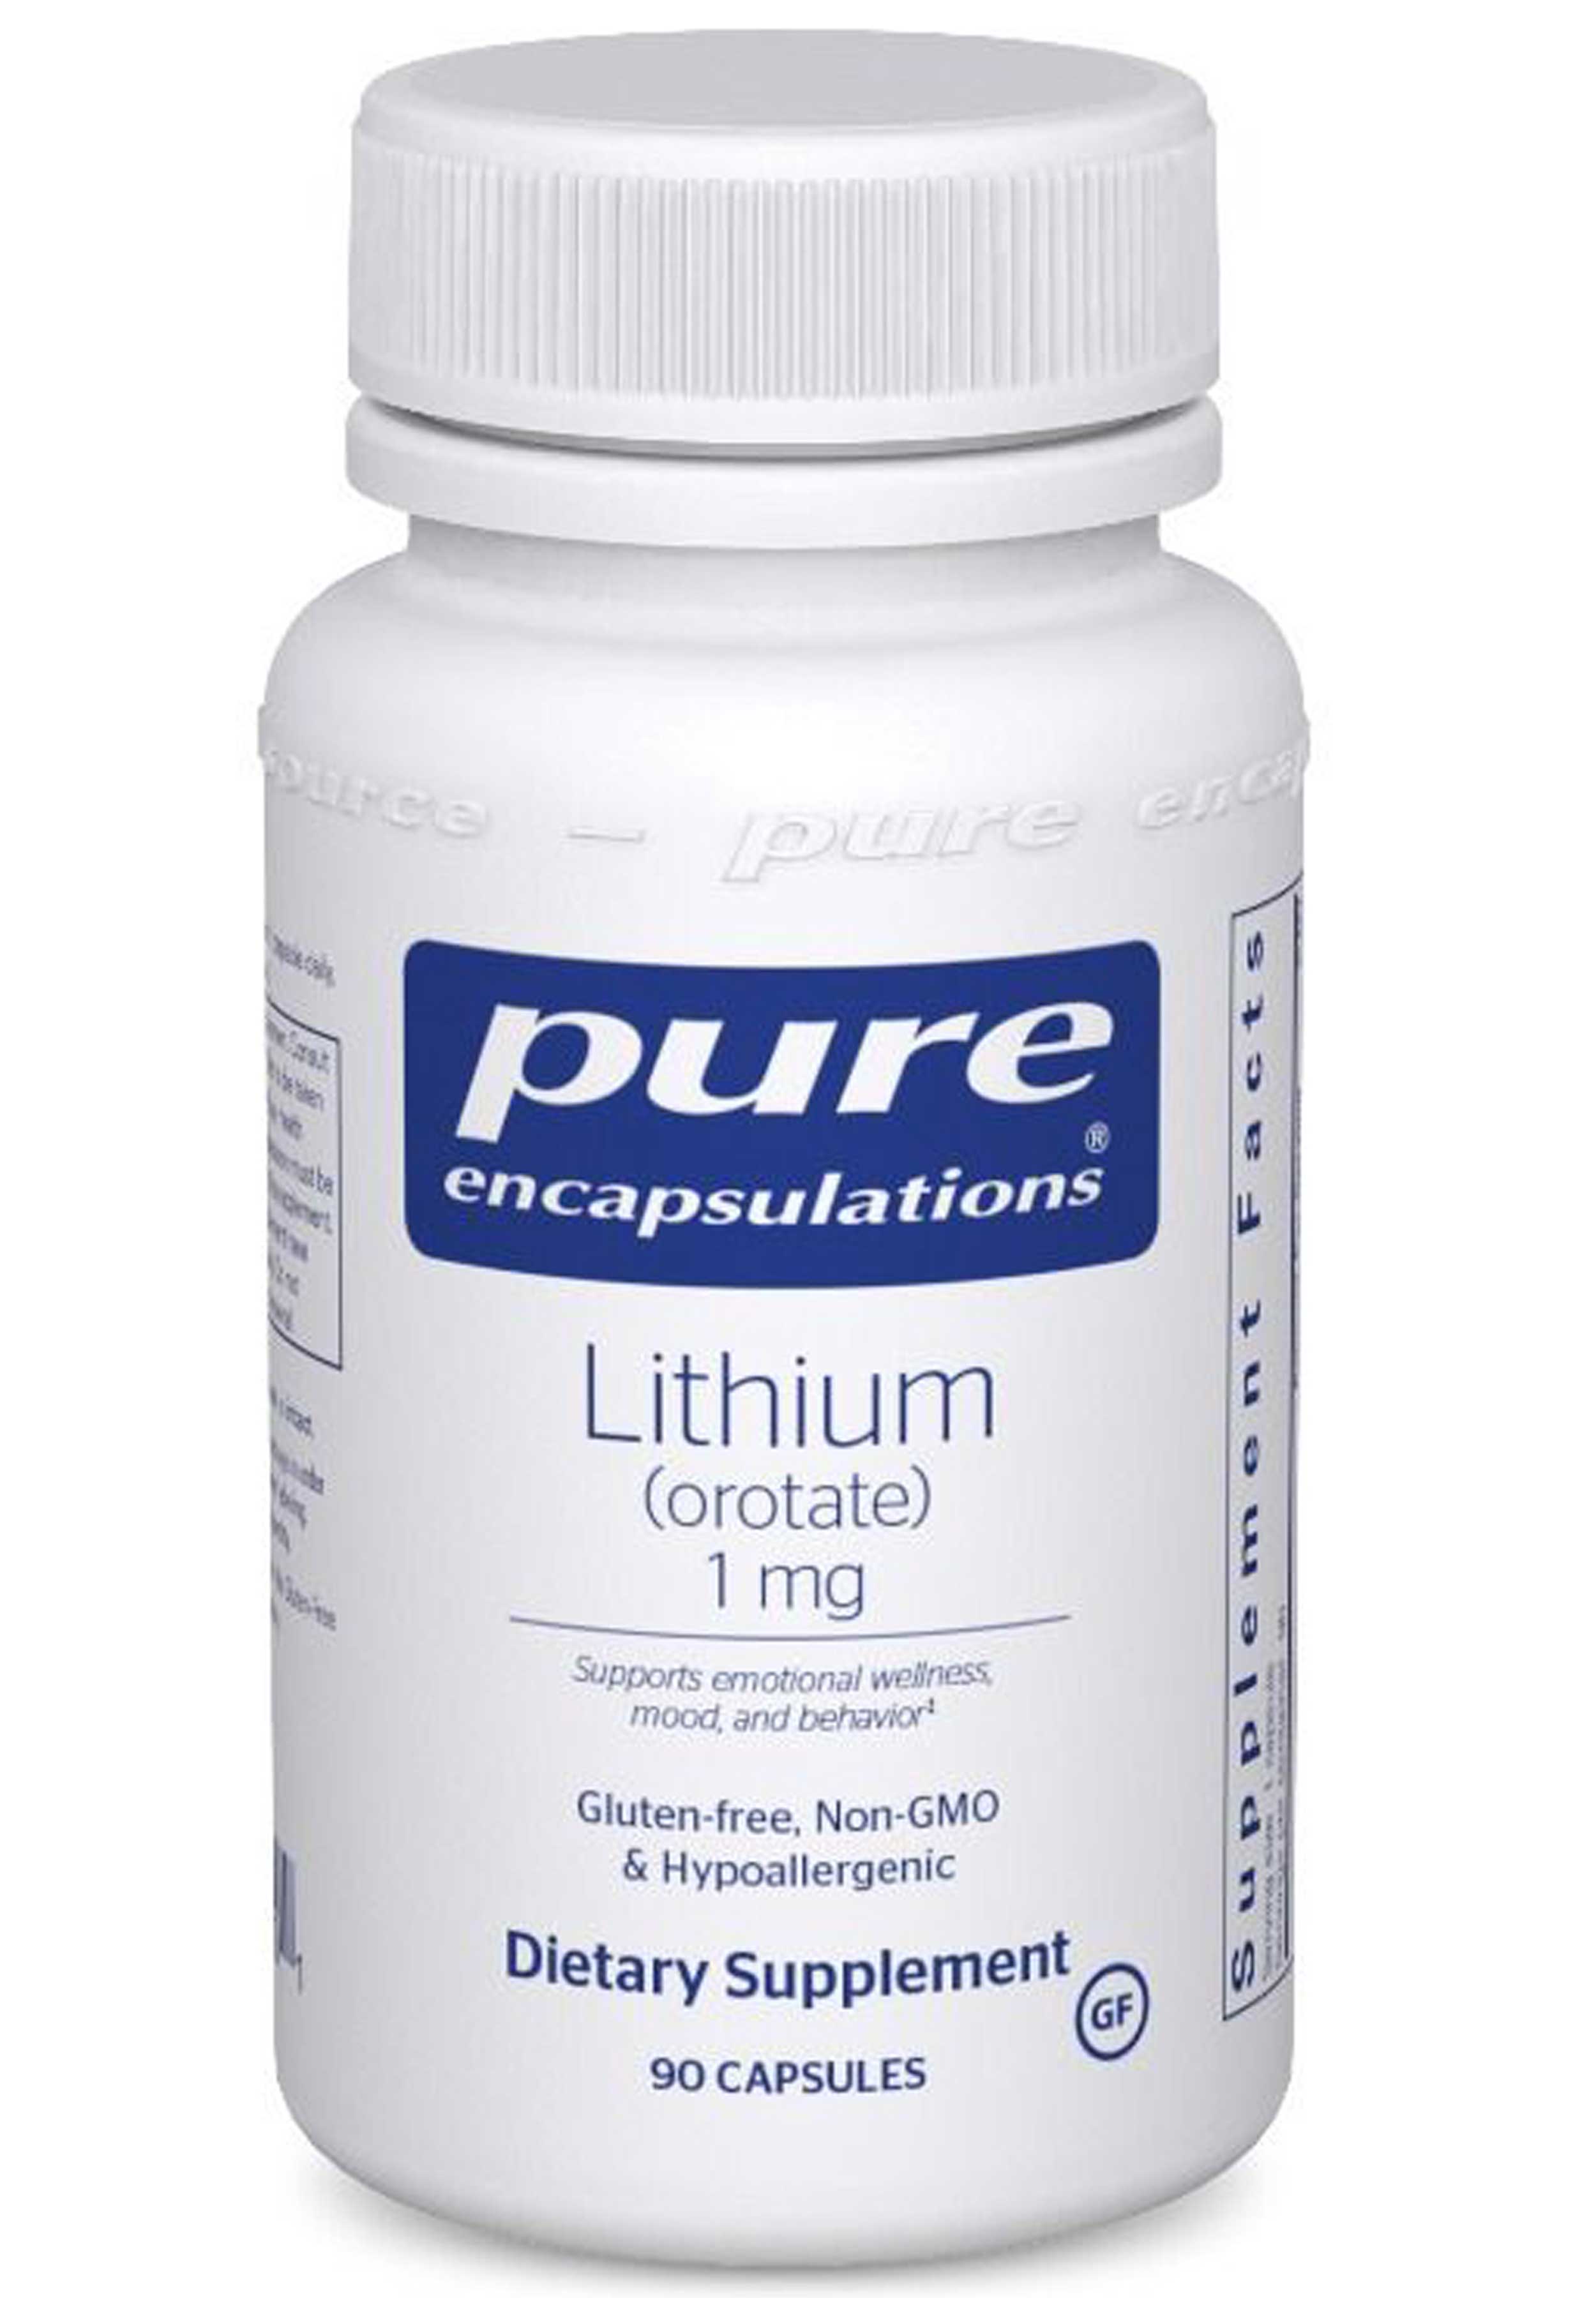 Pure Encapsulations Lithium (Orotate) 1 mg